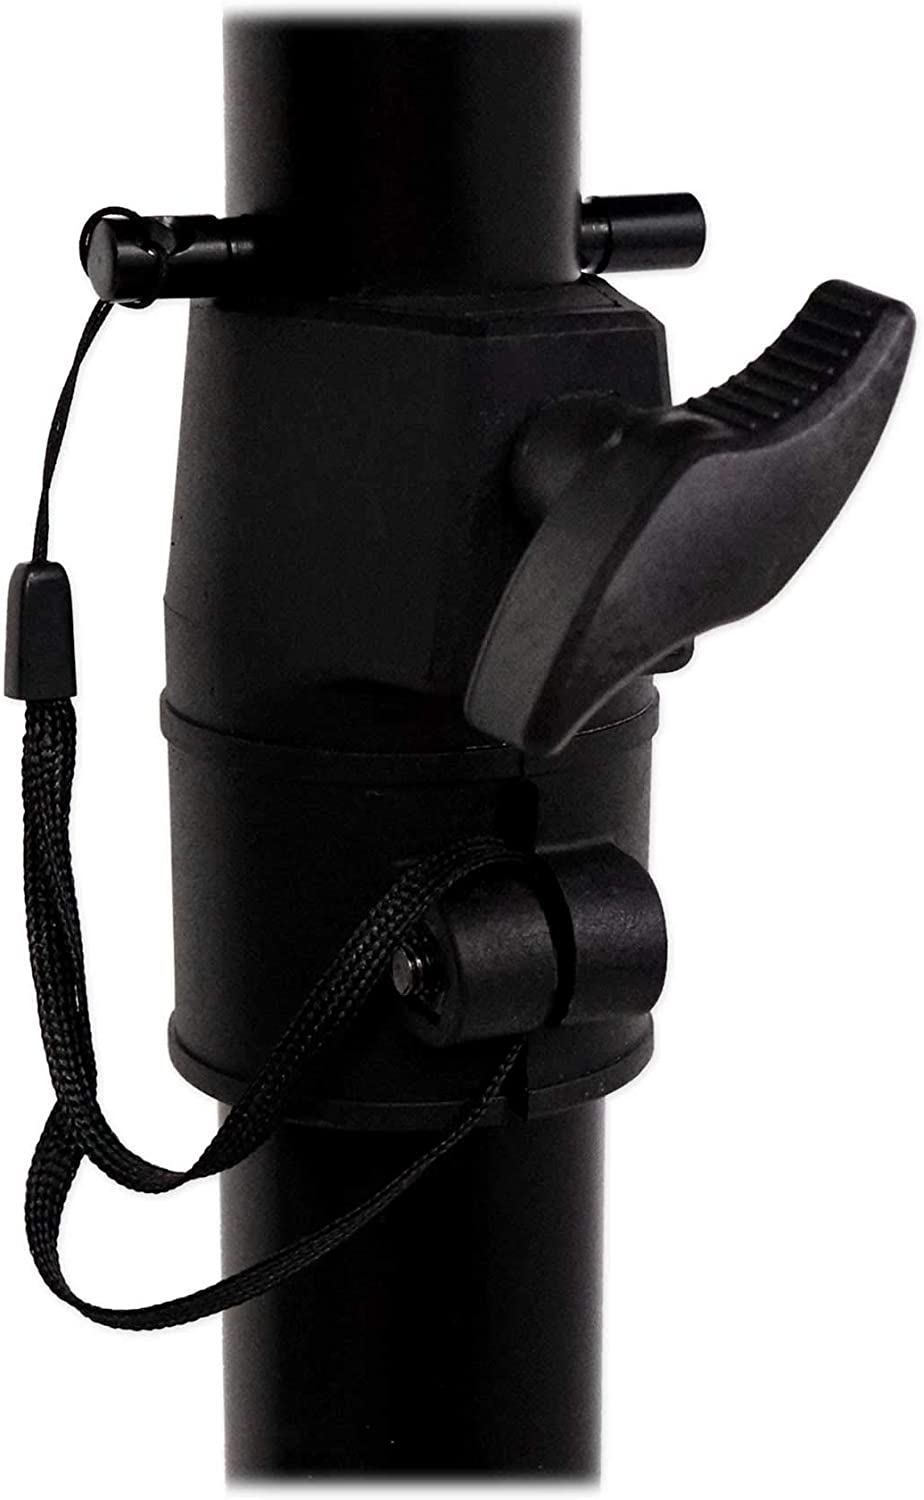 Rockville RVSM1 Near-Field Studio Monitor Speaker Metal Stands w/ Adjustable Height (Black)